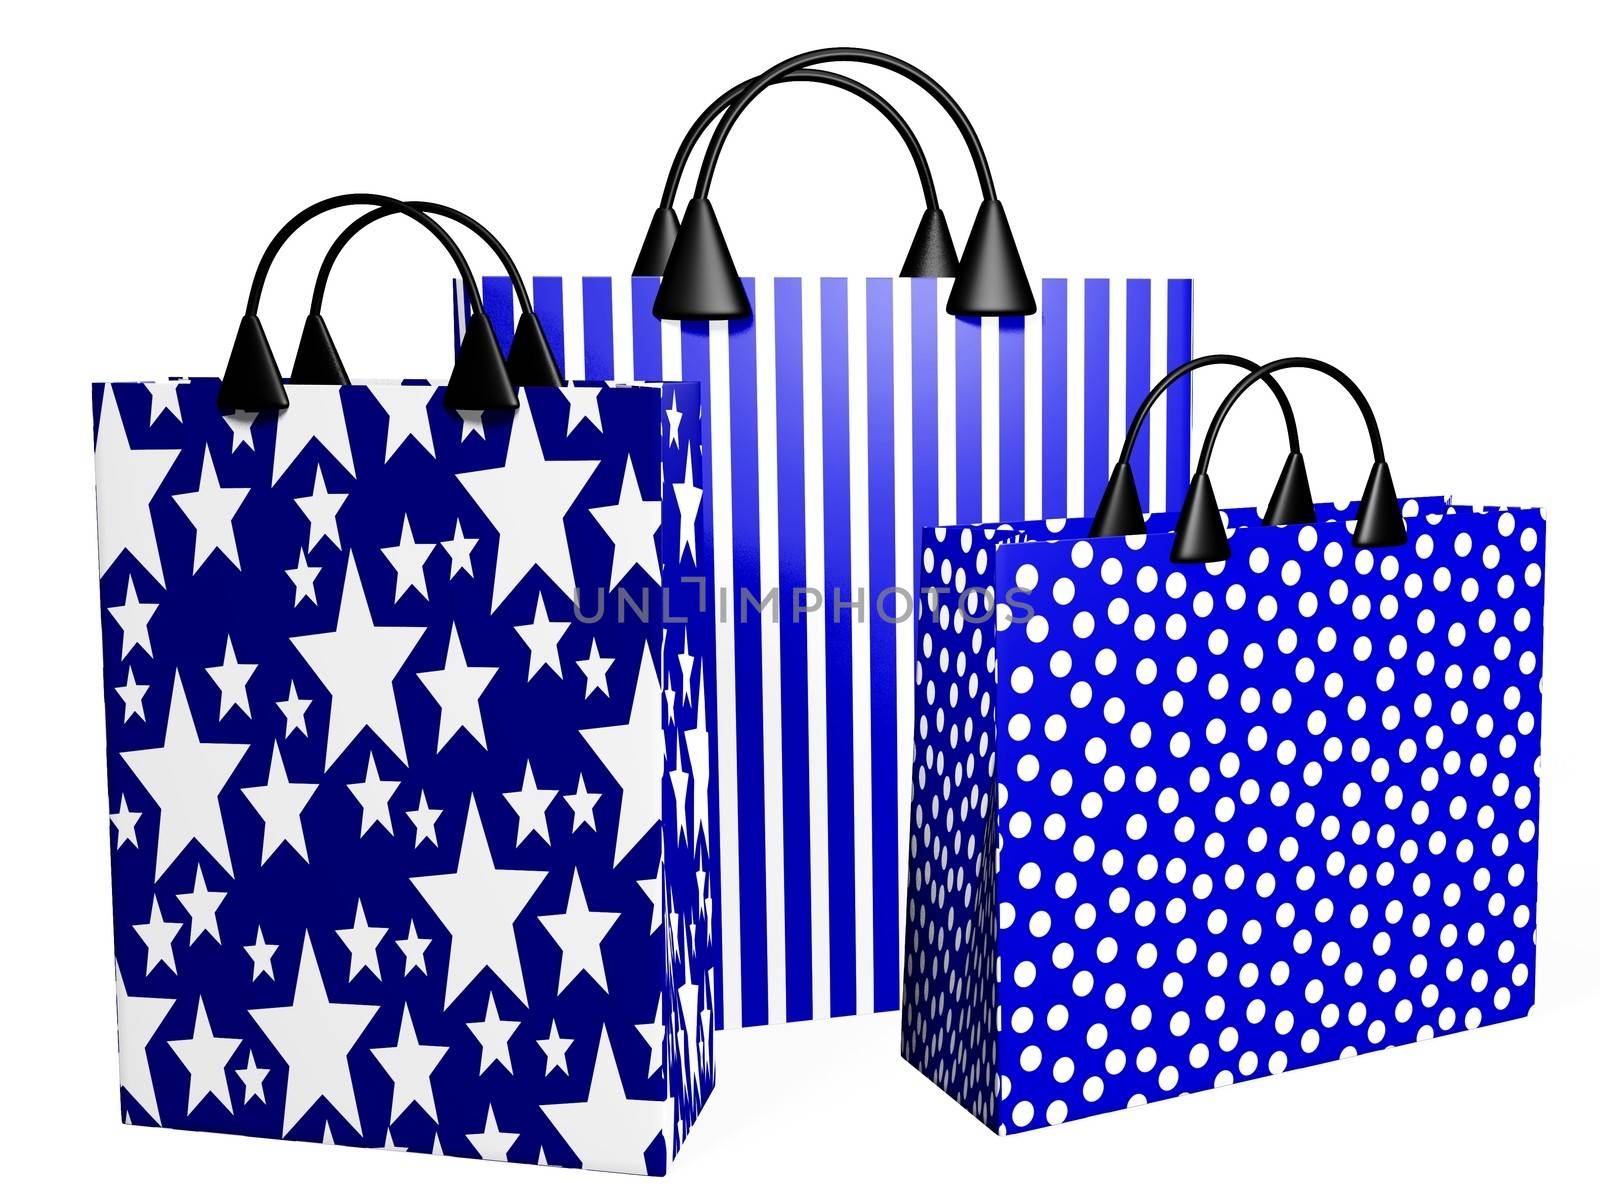 Three 3D shopping bags in festive blue prints
